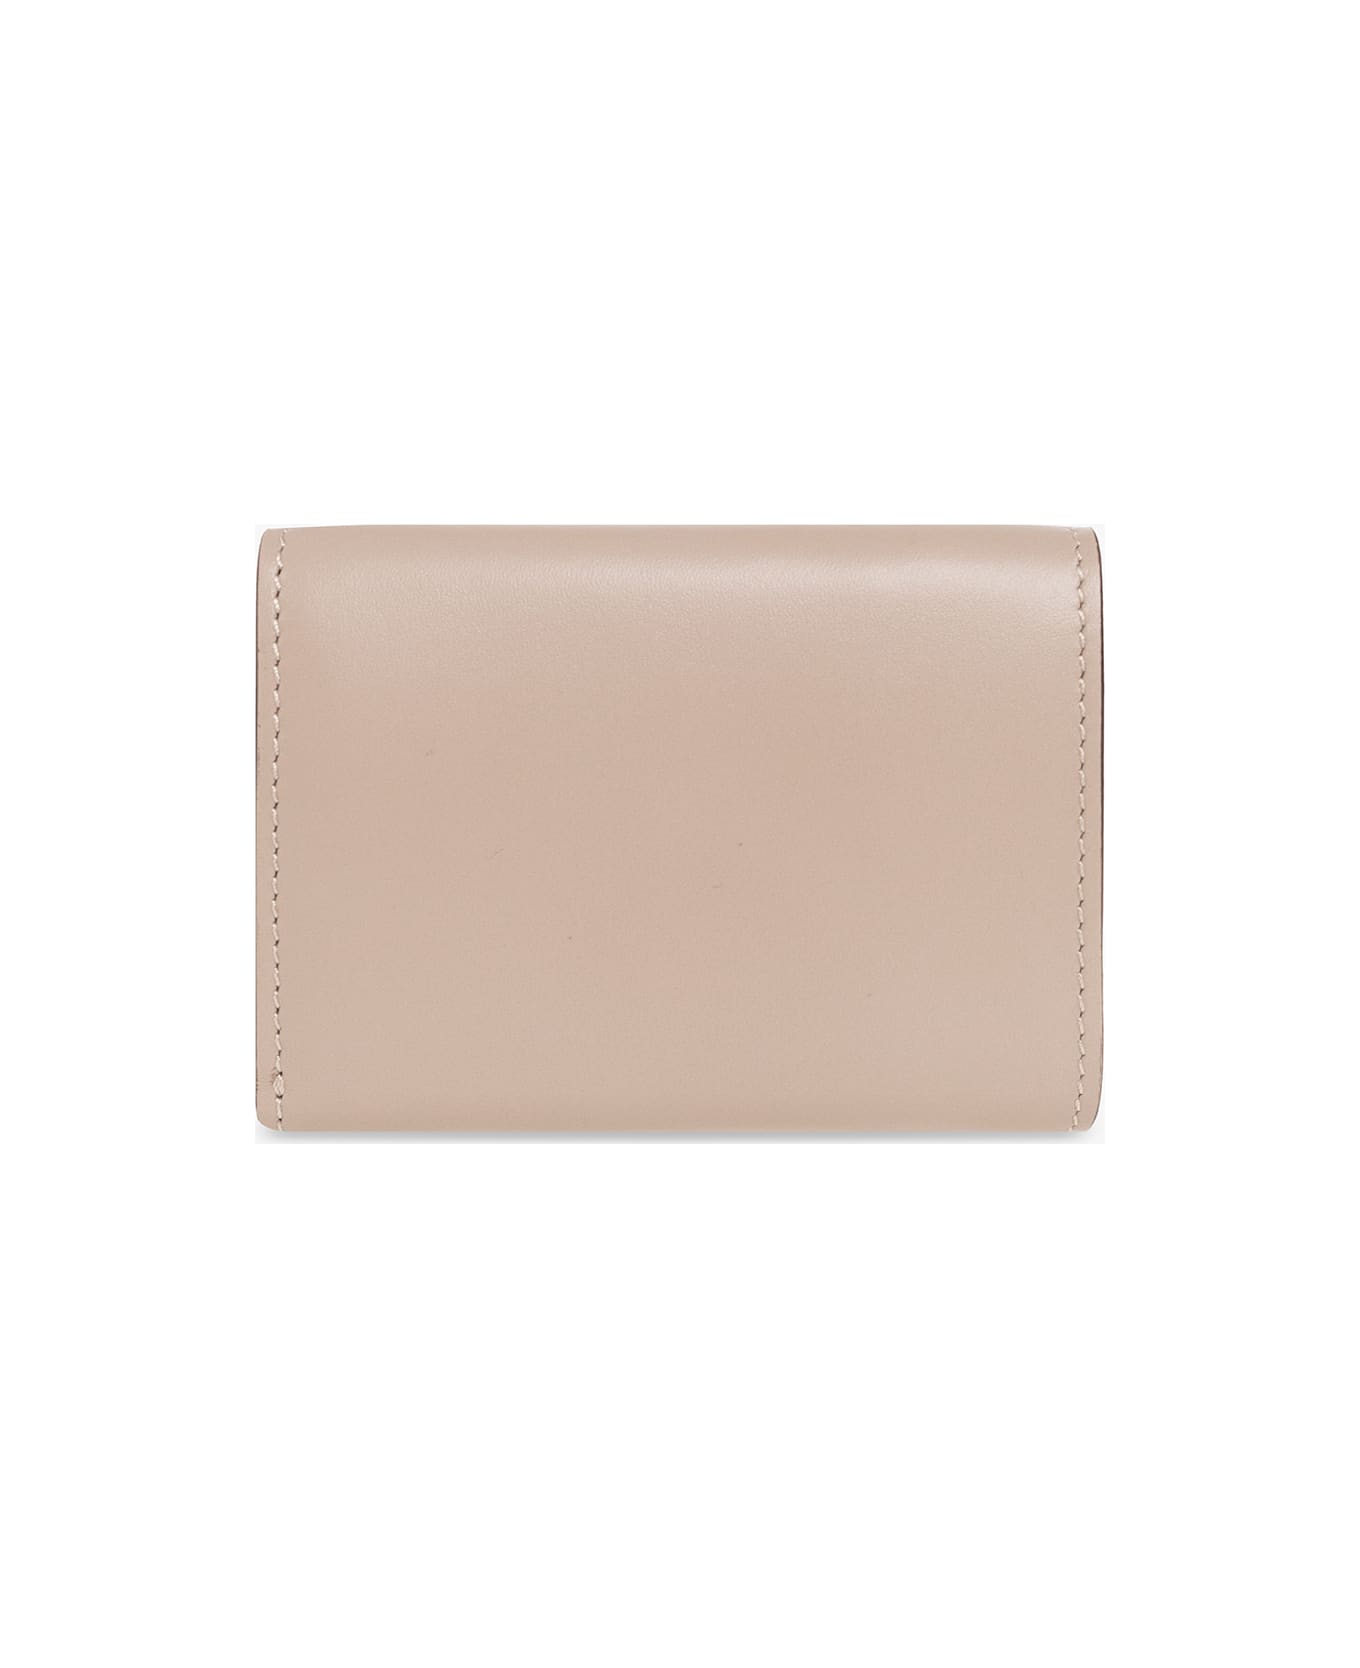 Fendi Micro Trifold Wallet - Tortora+oro soft